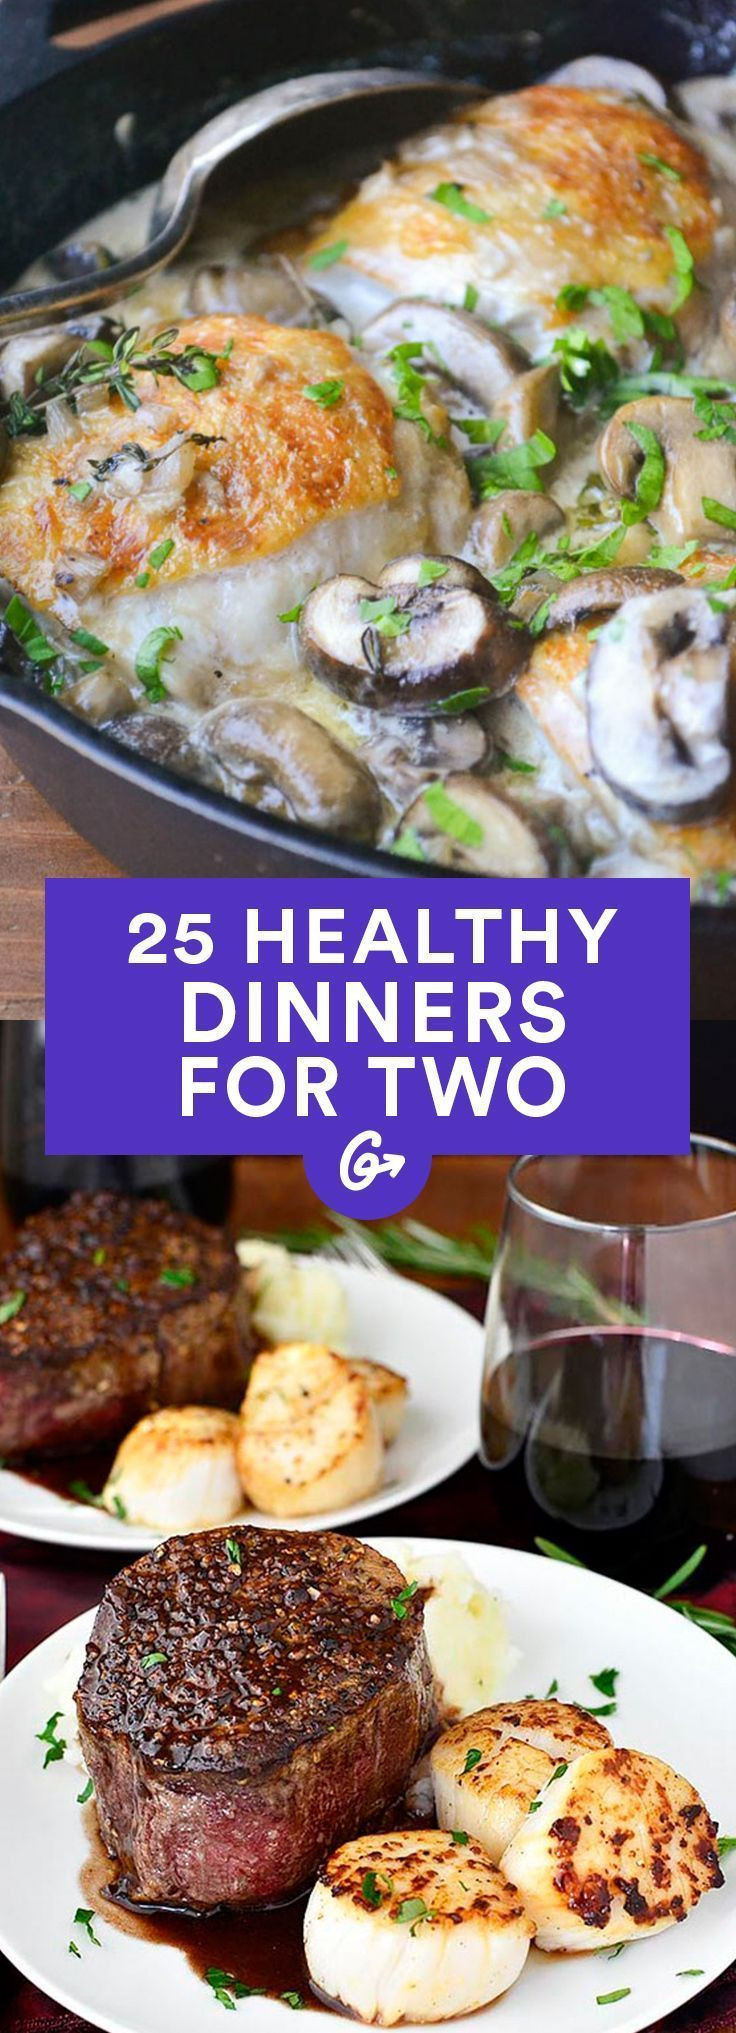 Healthy Cheap Dinner Ideas
 100 Healthy Dinner Recipes on Pinterest